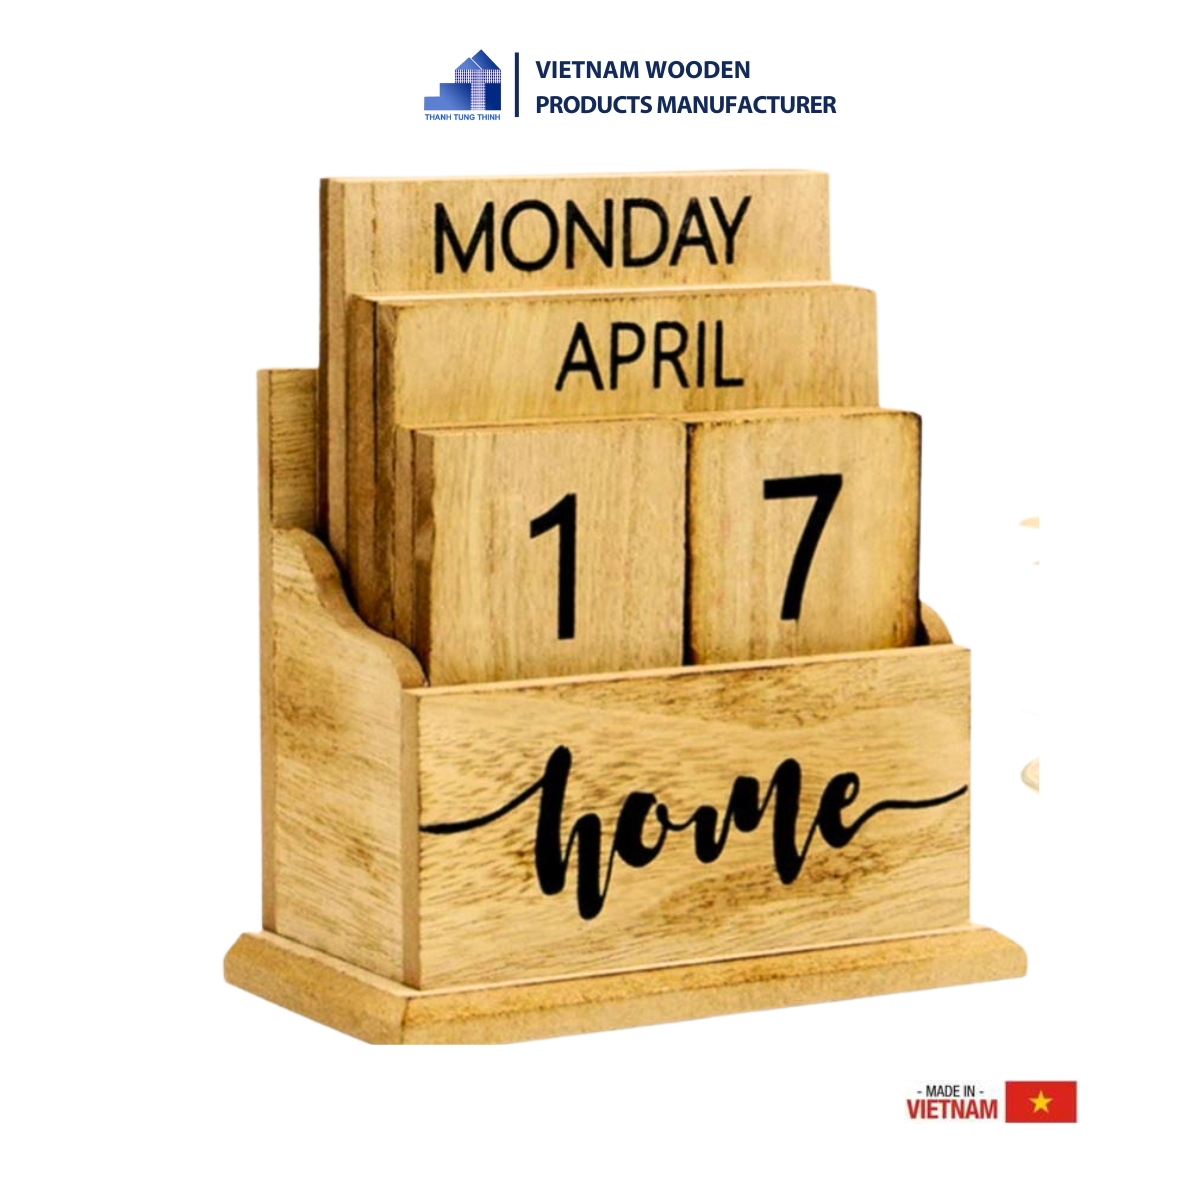 Wooden desk calendar serves as a decorative piece for your home